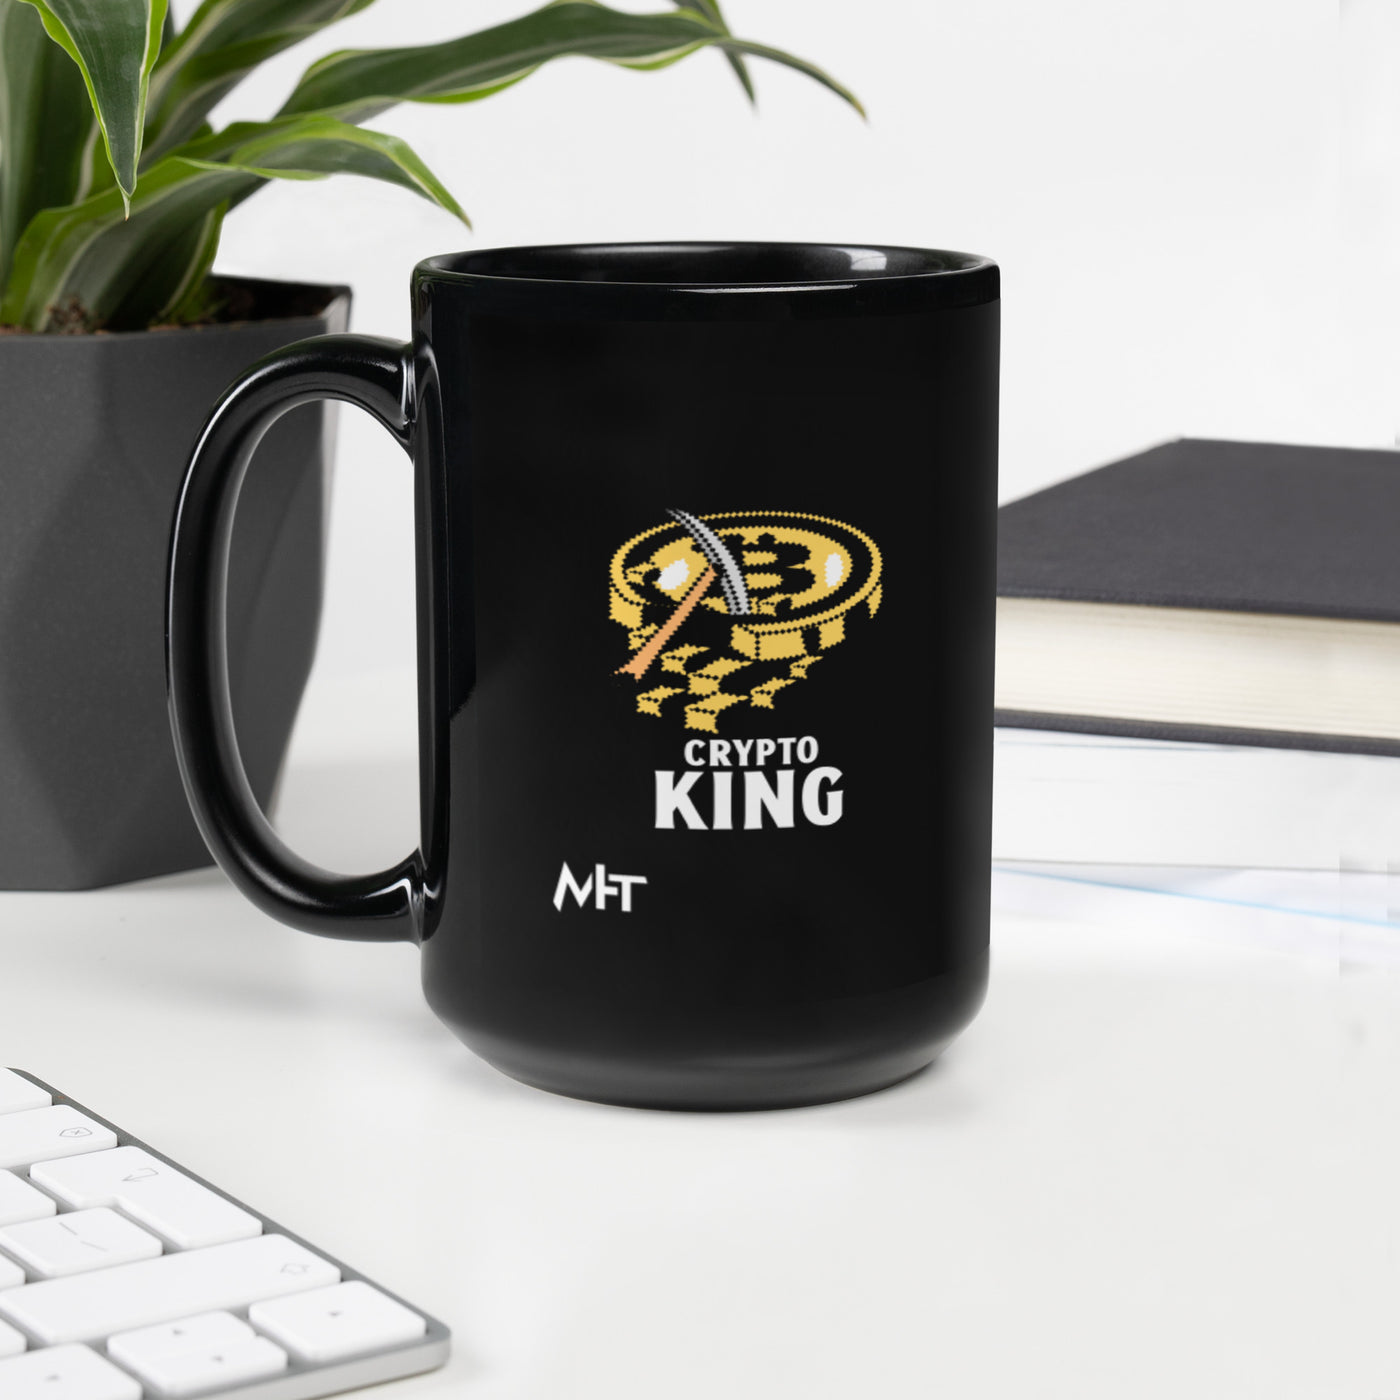 Crypto King - Black Glossy Mug